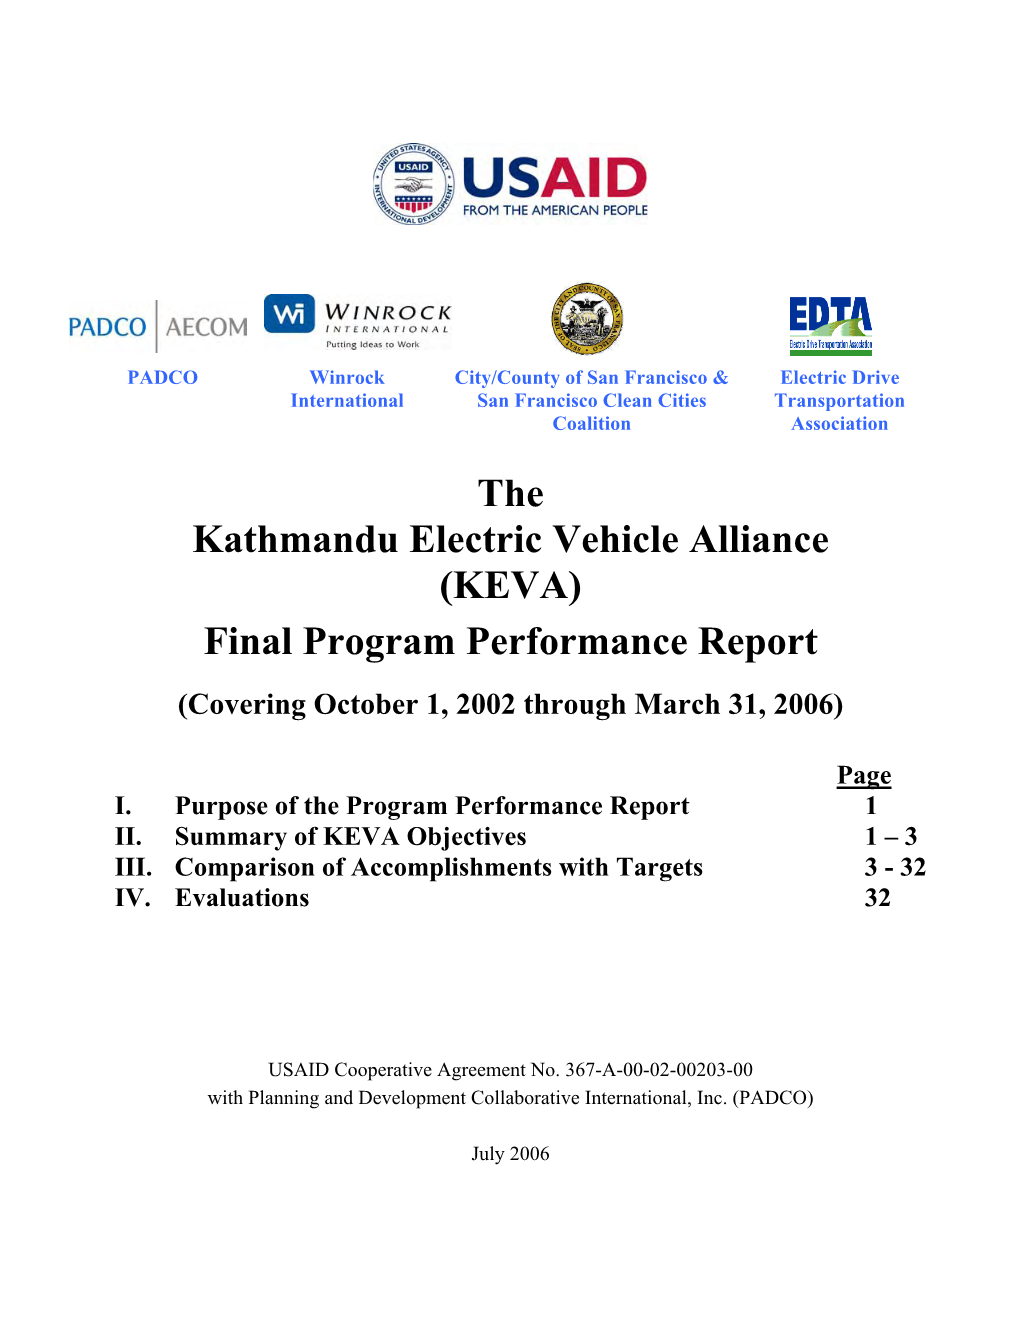 The Kathmandu Electric Vehicle Alliance (KEVA) Final Program Performance Report